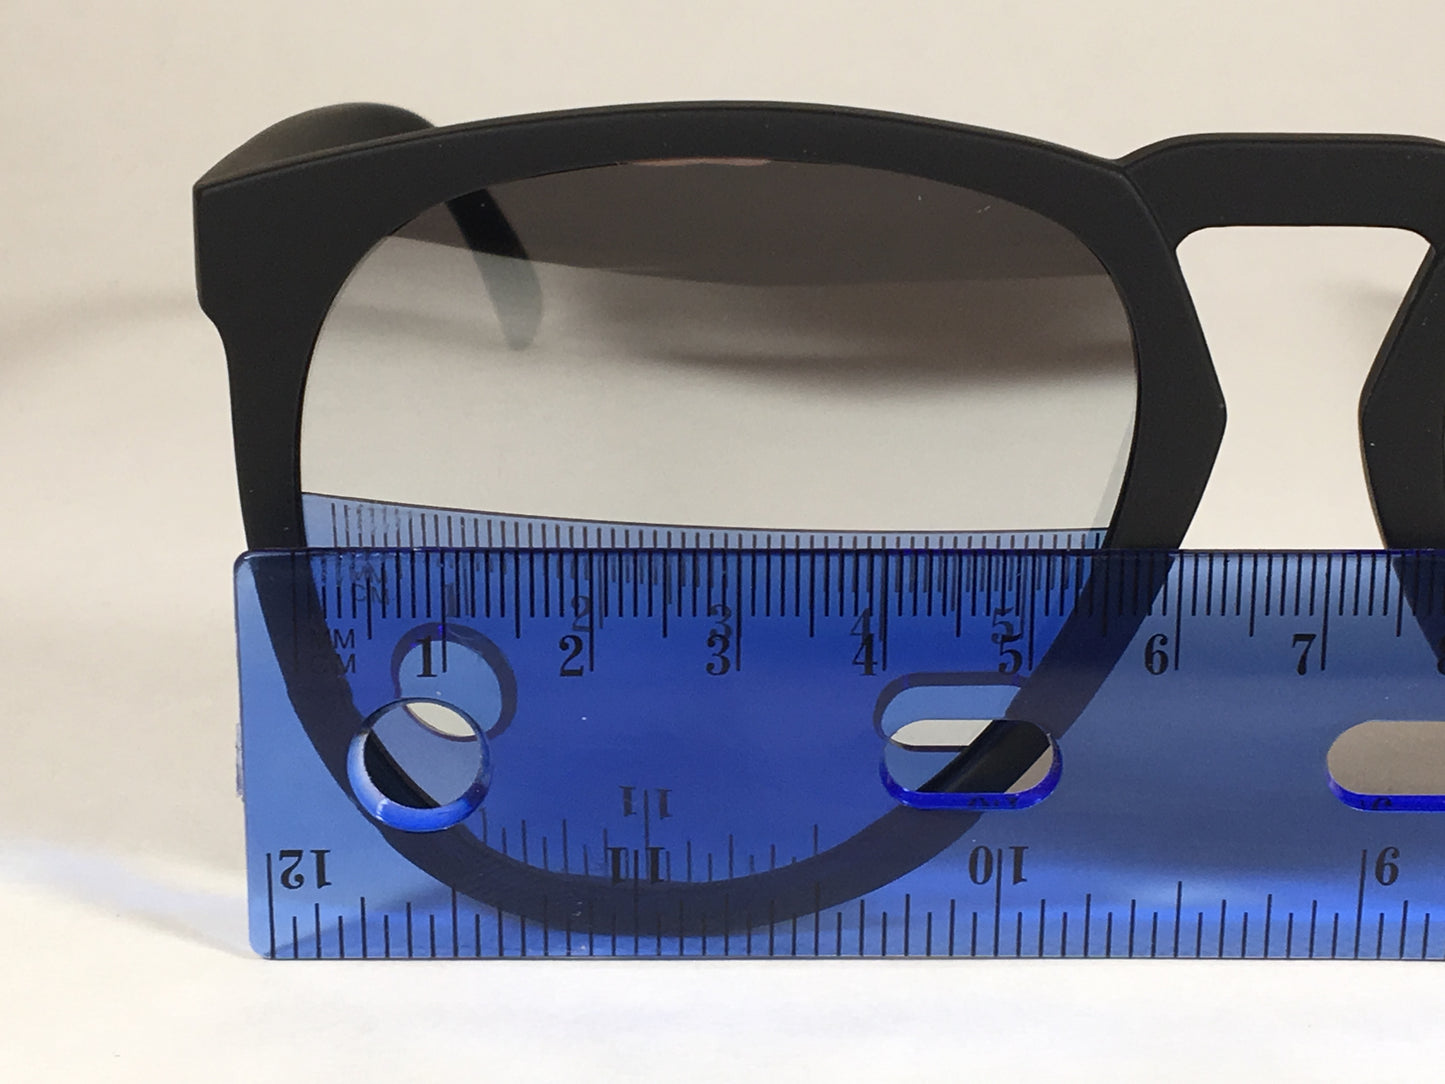 Quay Phd 122 Qm000195 Blk/slv Sunglasses Matte Black Rubber Finish Silver Mirror Lens New Unisex - Sunglasses